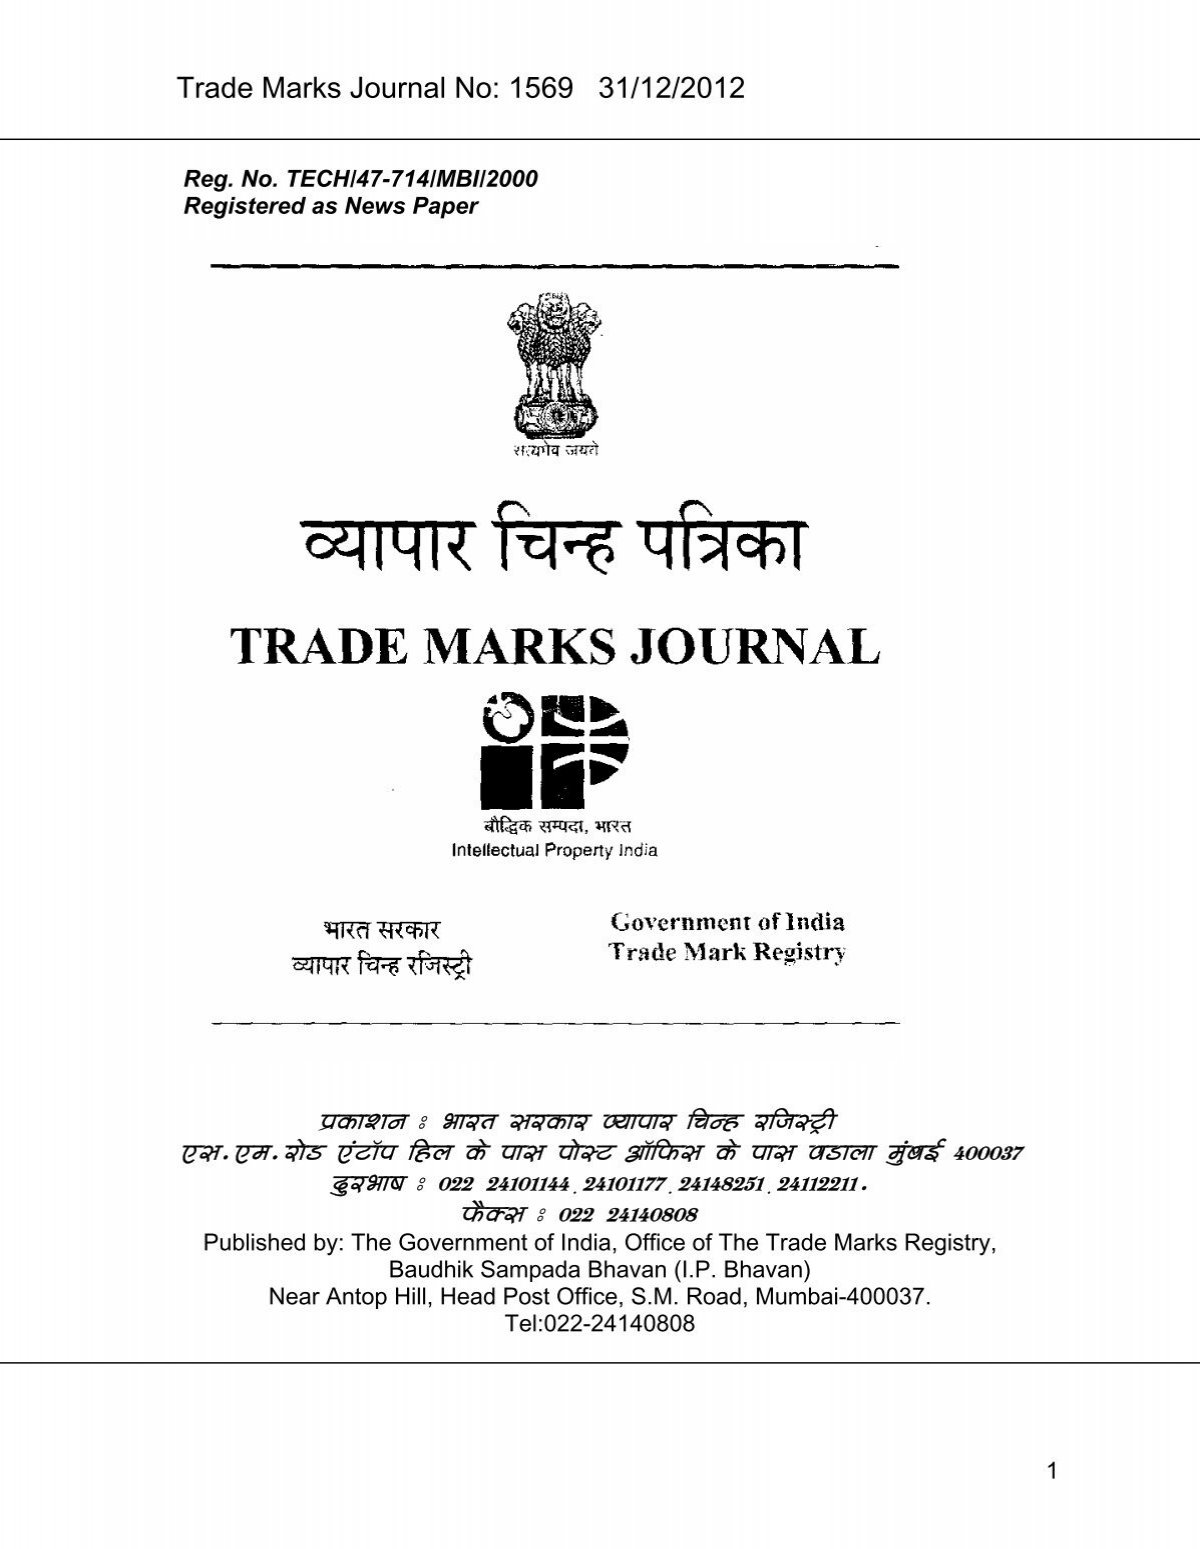 Leggings Wholesale Price In Tirupur Subramaniam  International Society of  Precision Agriculture